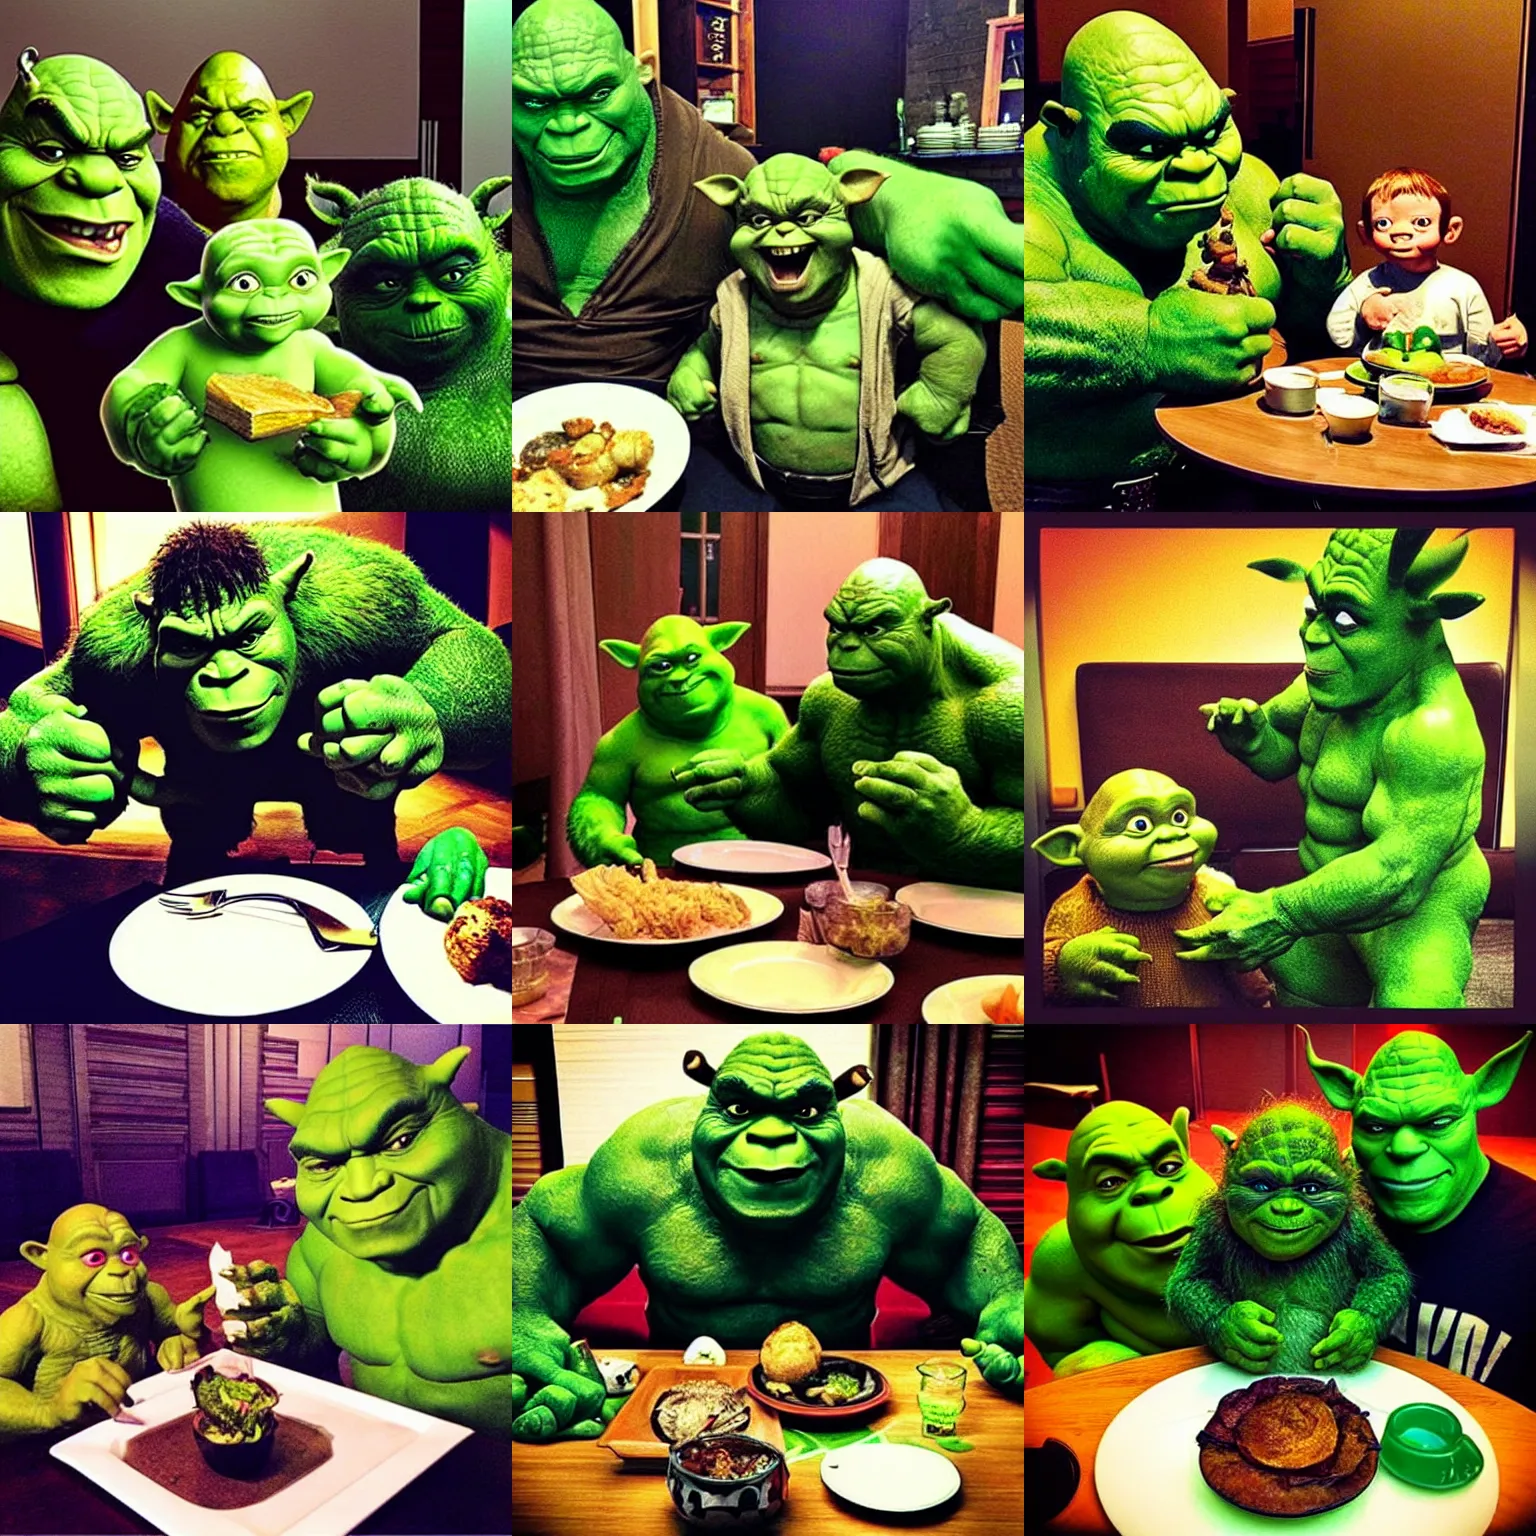 Prompt: “shrek, hulk and yoda eat dinner together”